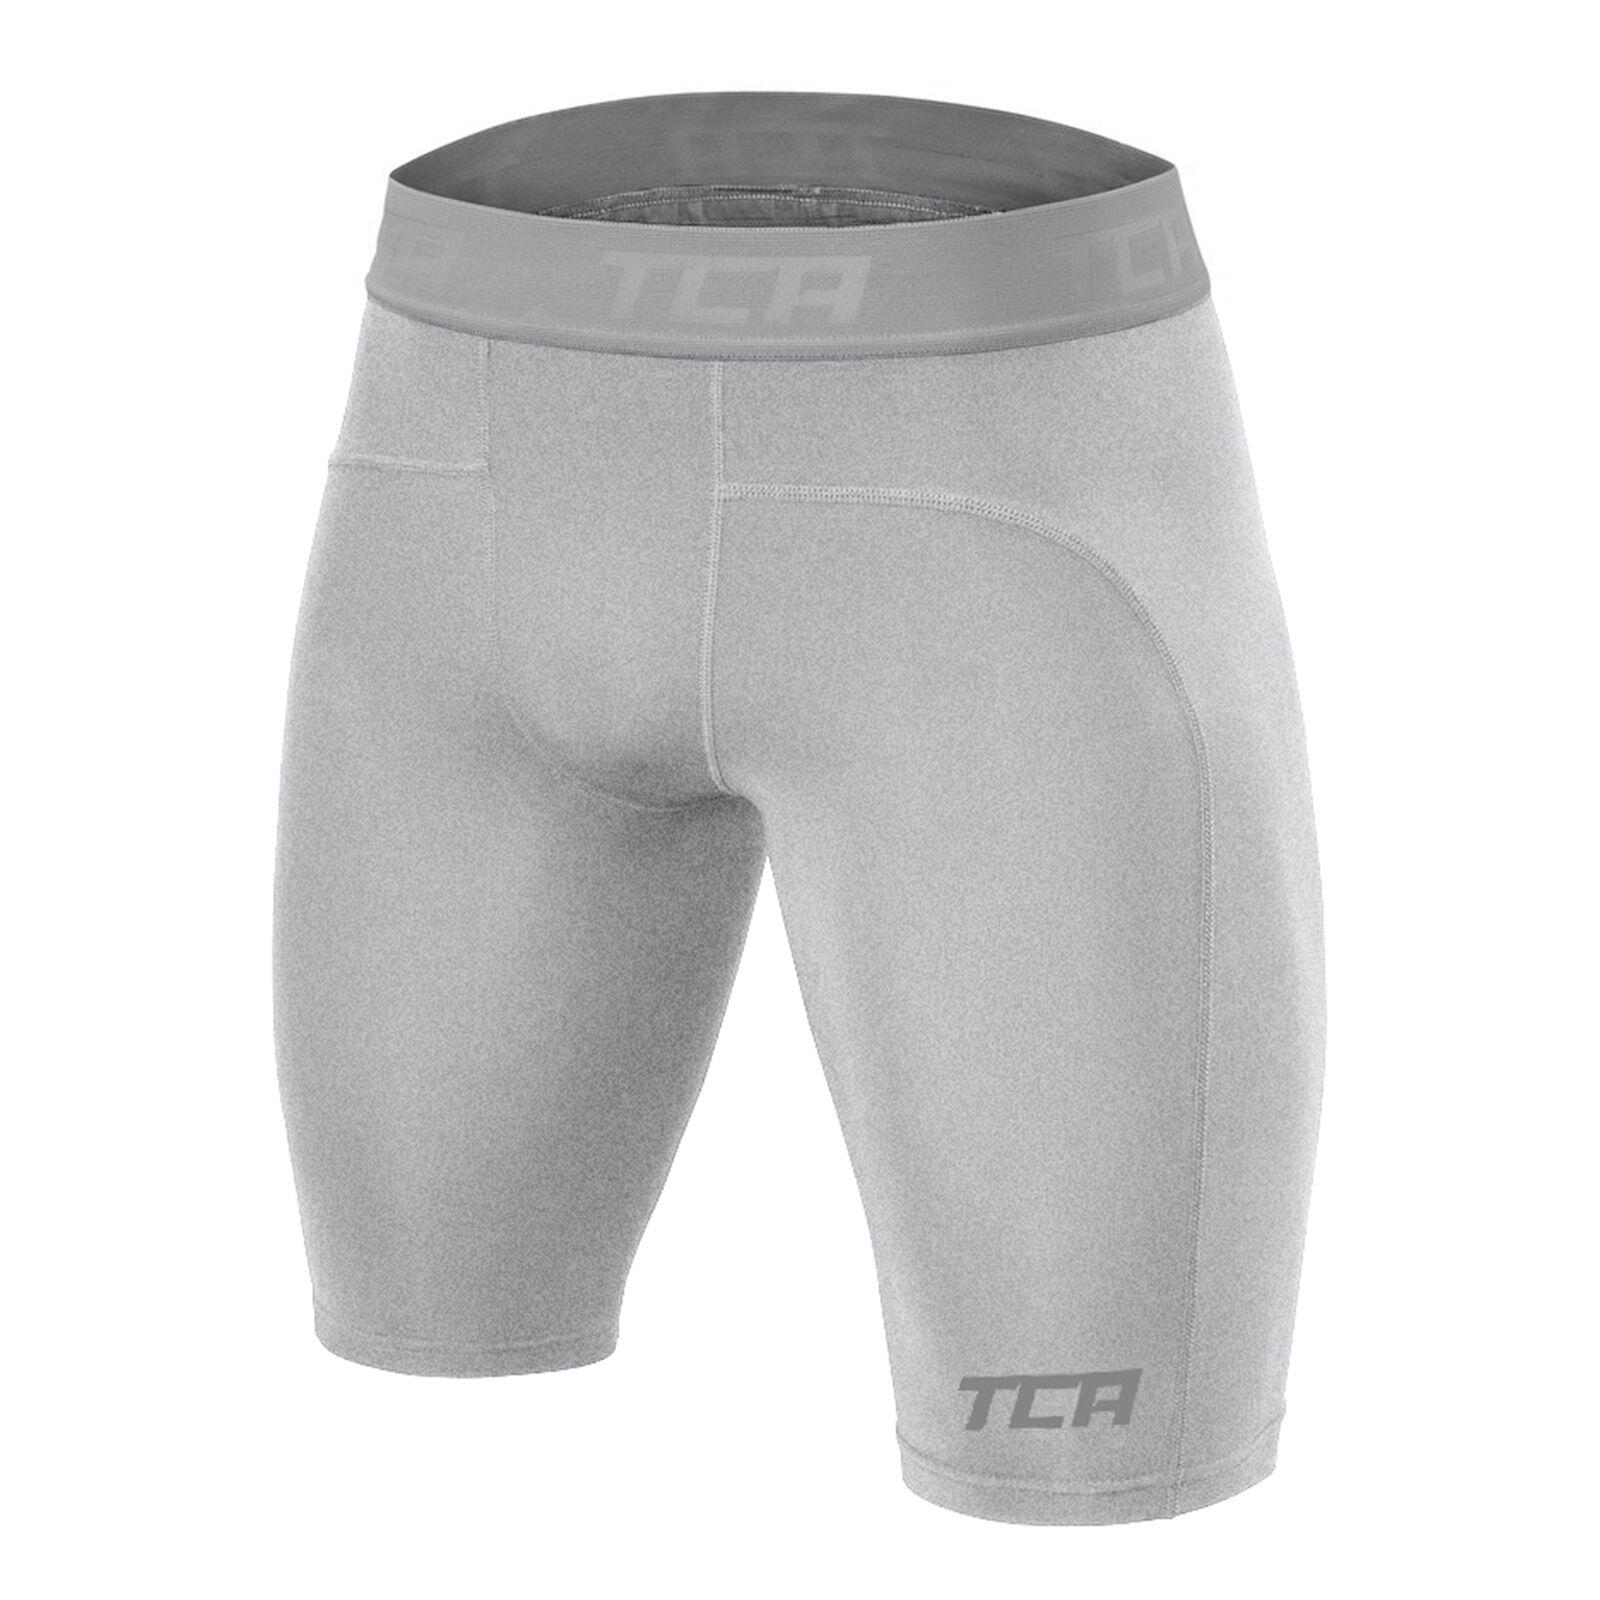 TCA Boys' Performance Base Layer Compression Shorts - Grey Marl